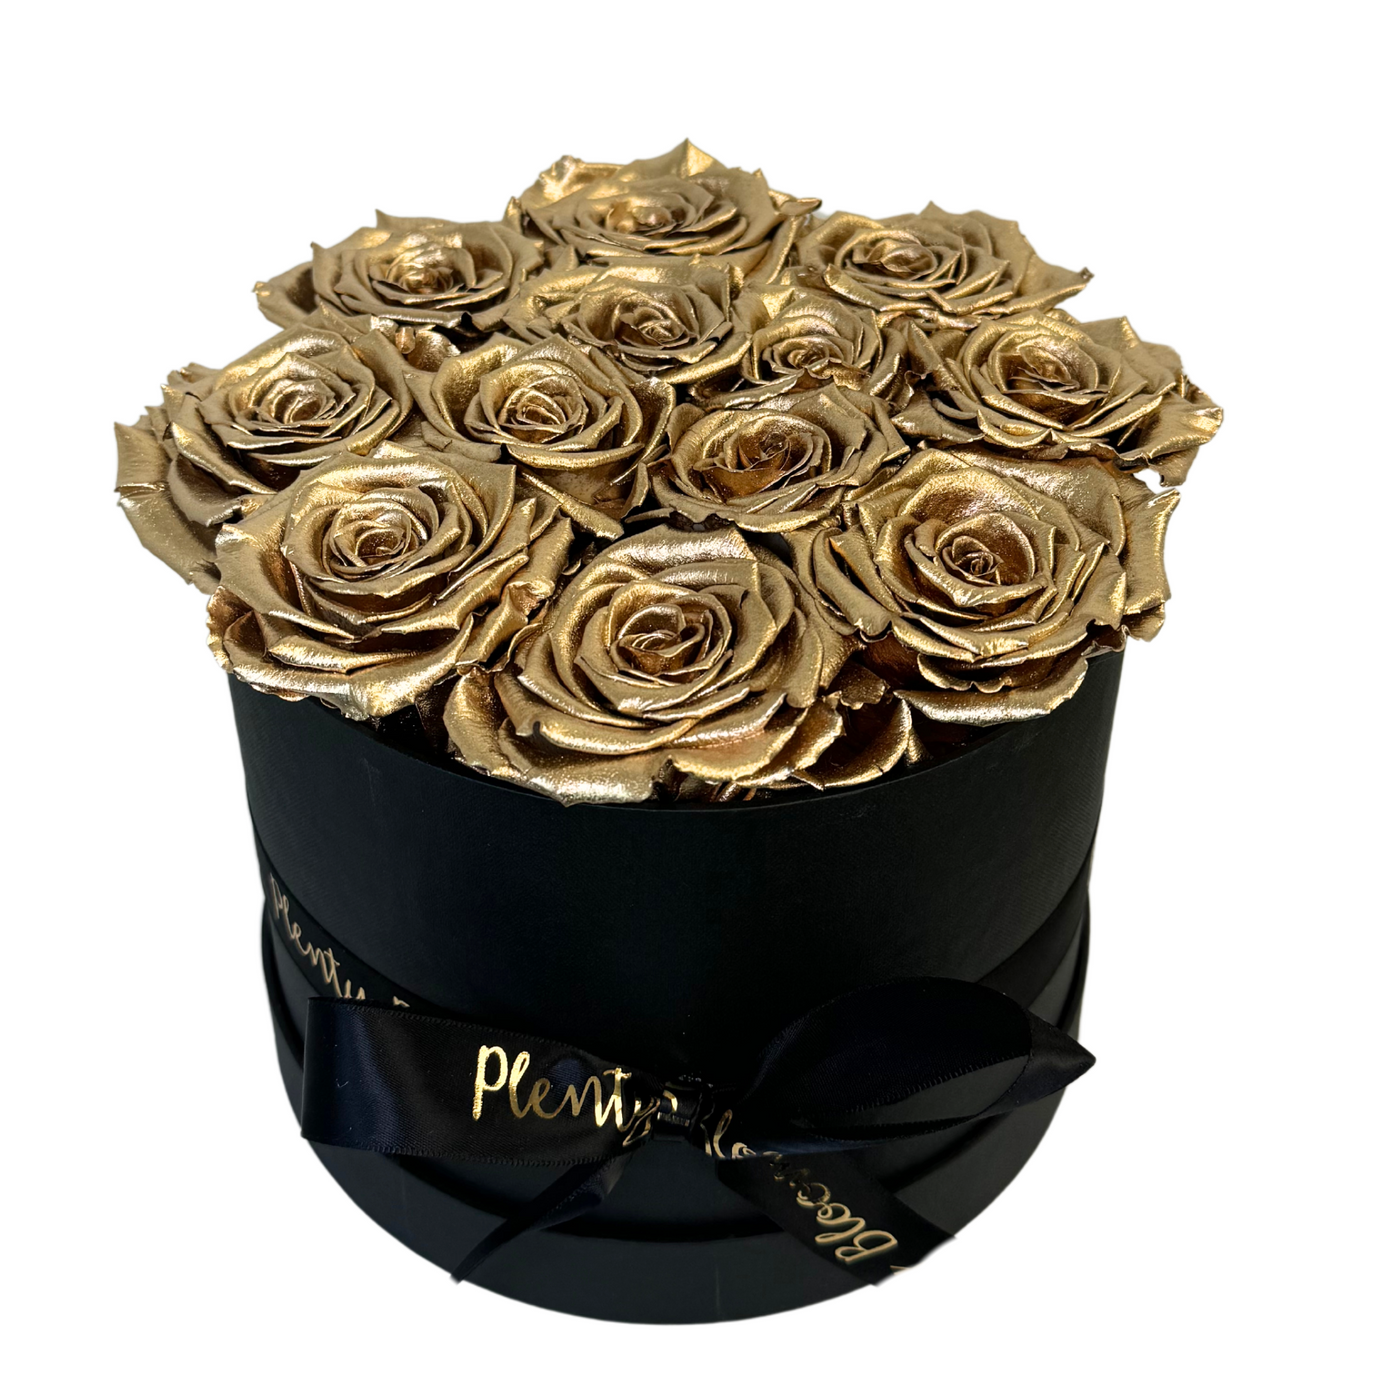 Signature Metallic Gold Preserved Roses Gift Box